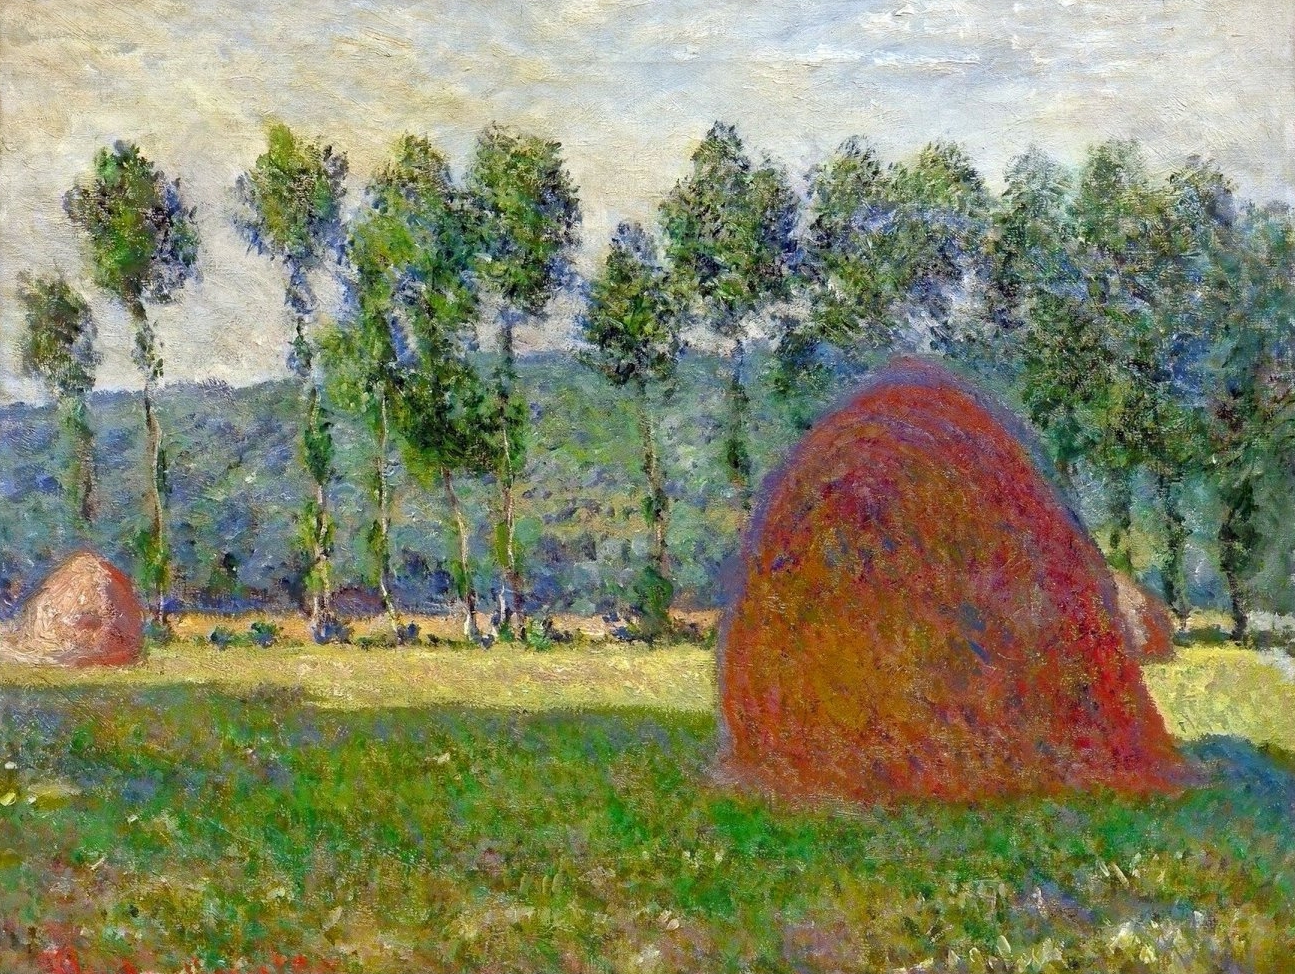 Claude+Monet-1840-1926 (287).jpg